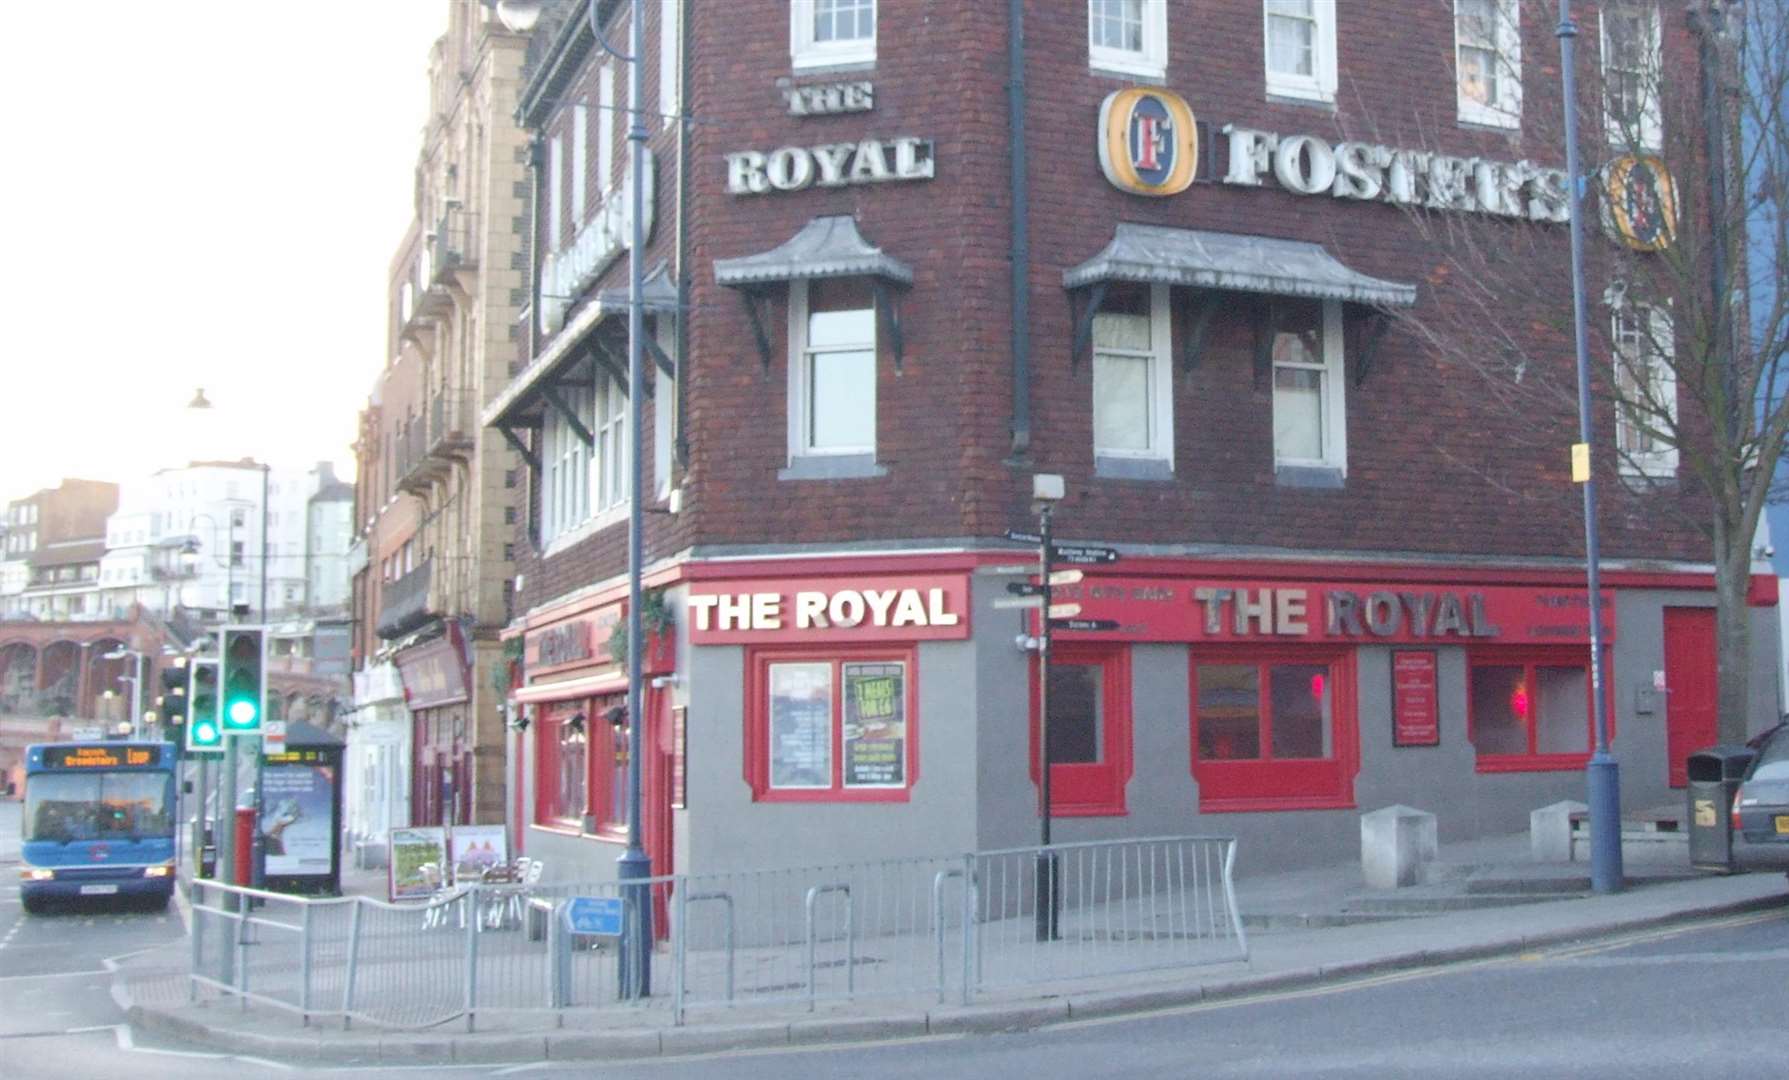 The Royal pub in Ramsgate